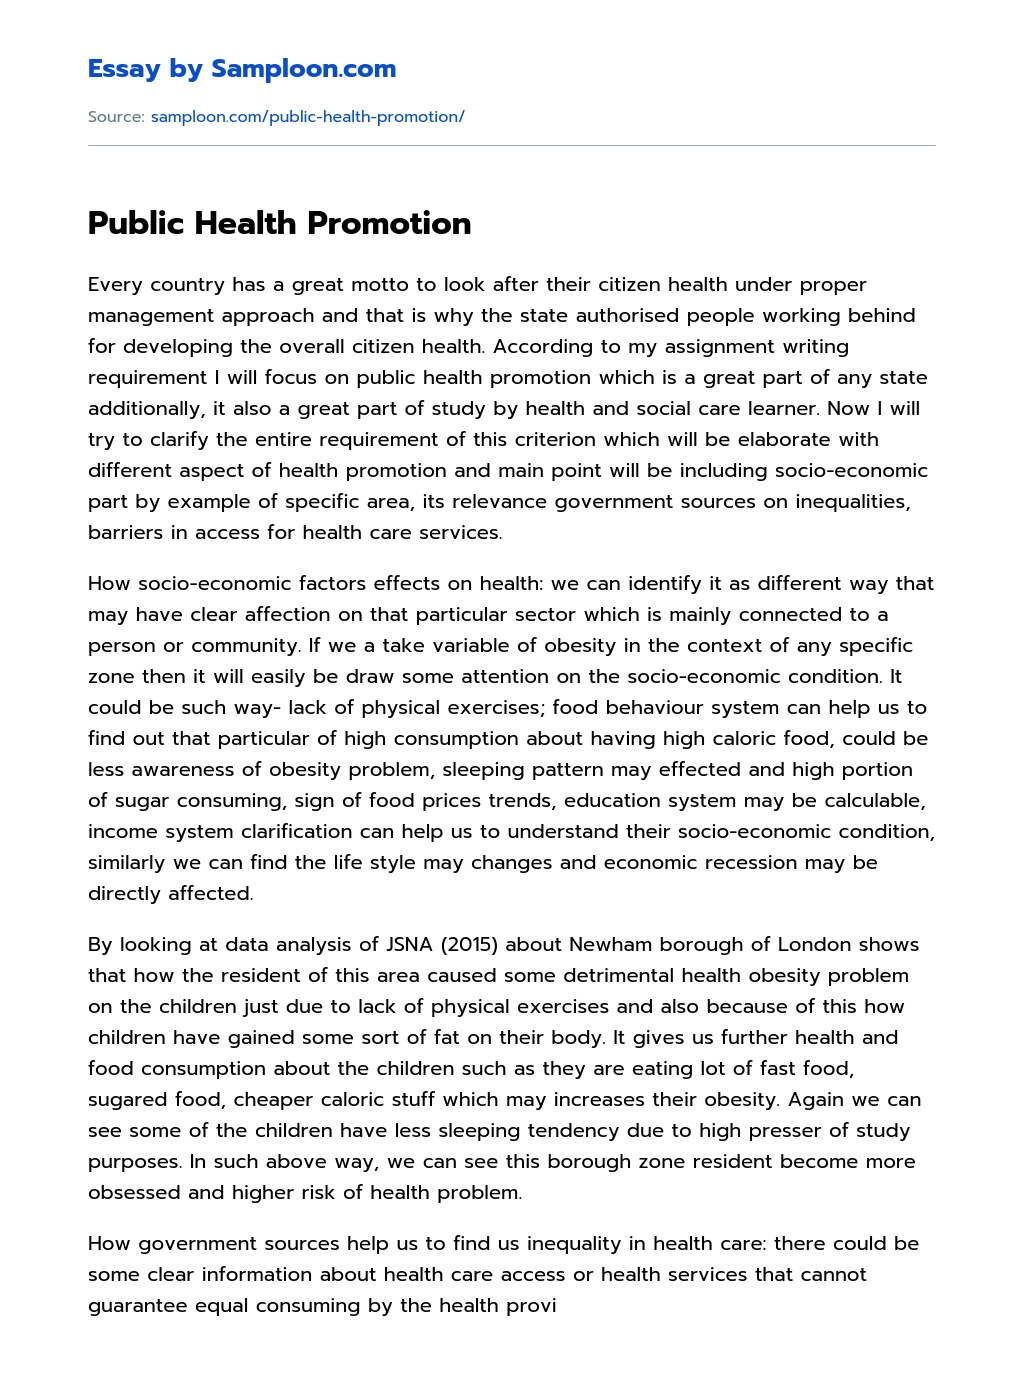 Public Health Promotion essay